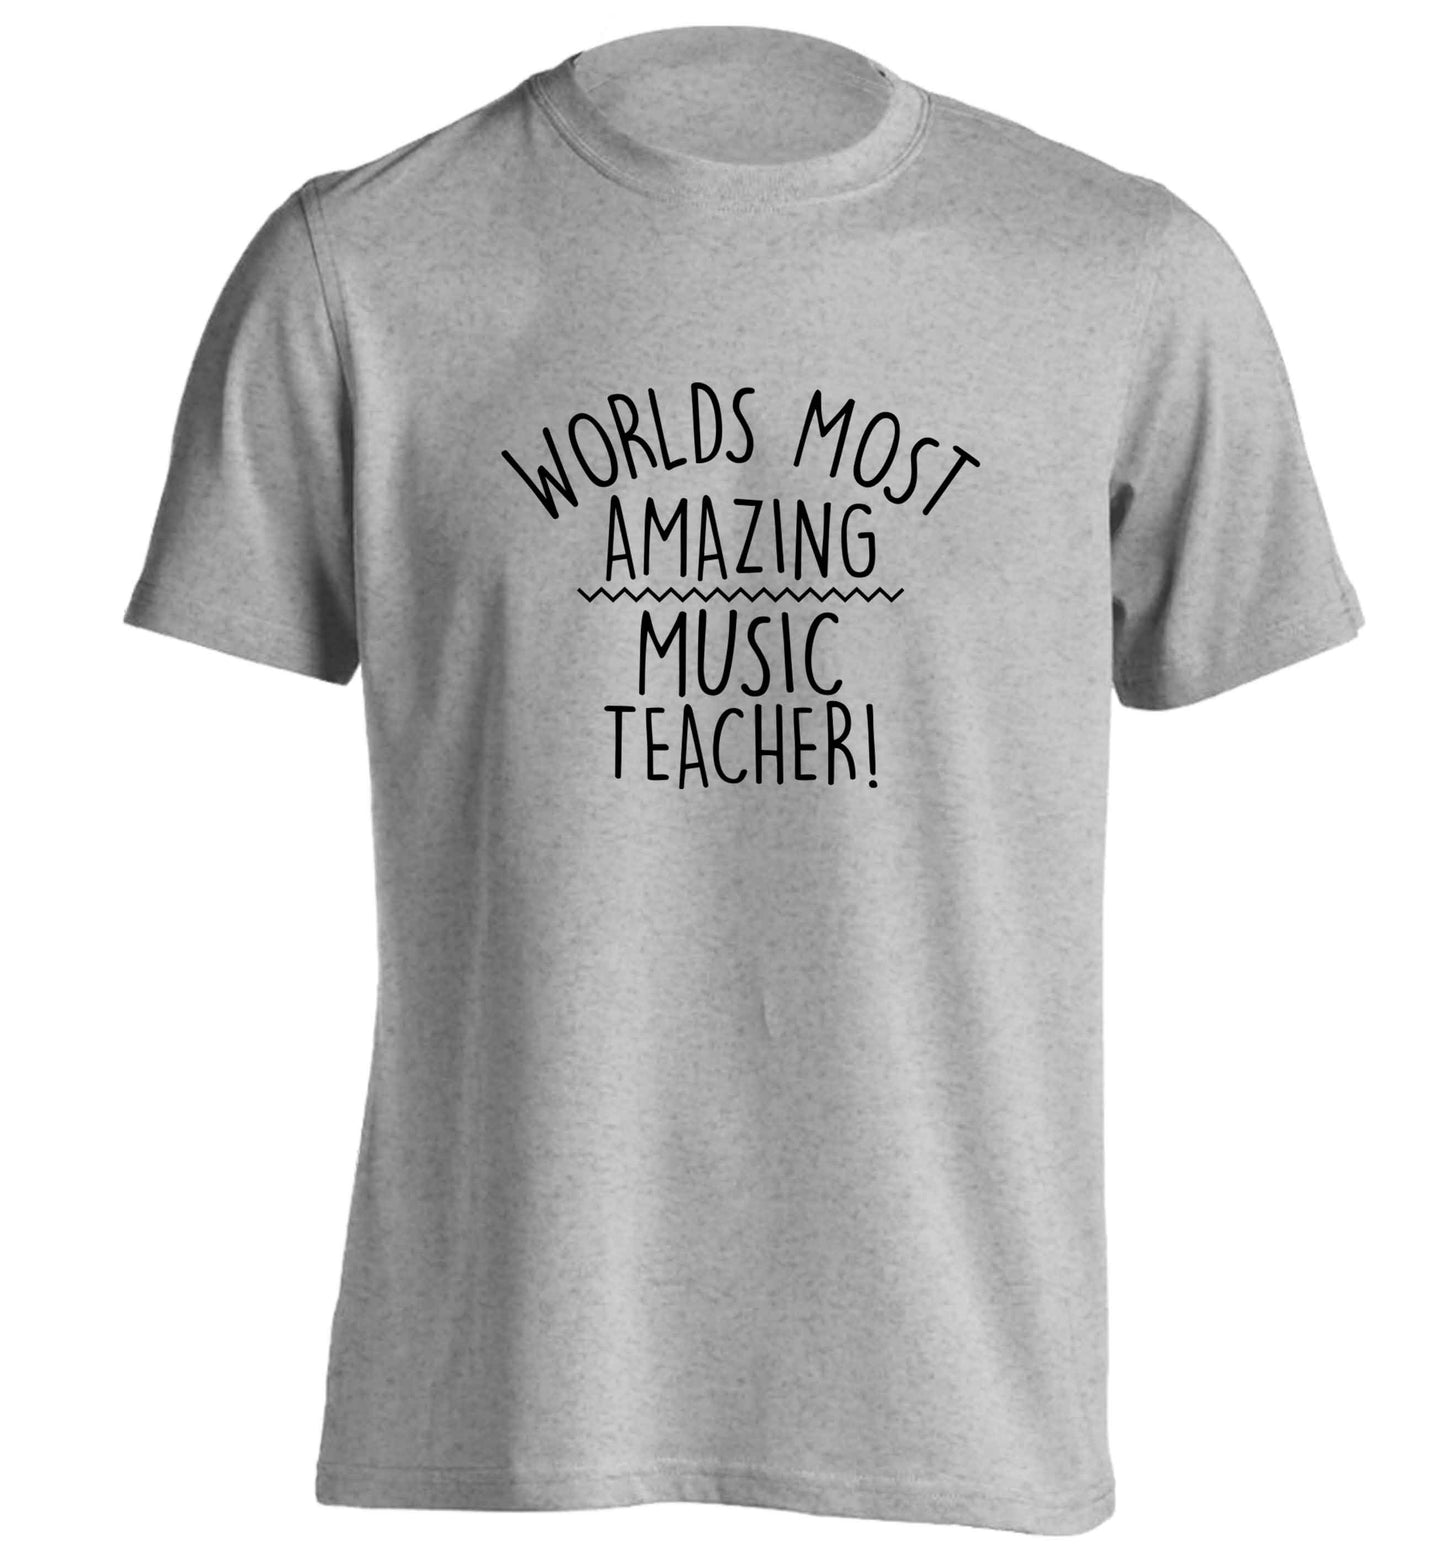 Worlds most amazing music teacher adults unisex grey Tshirt 2XL